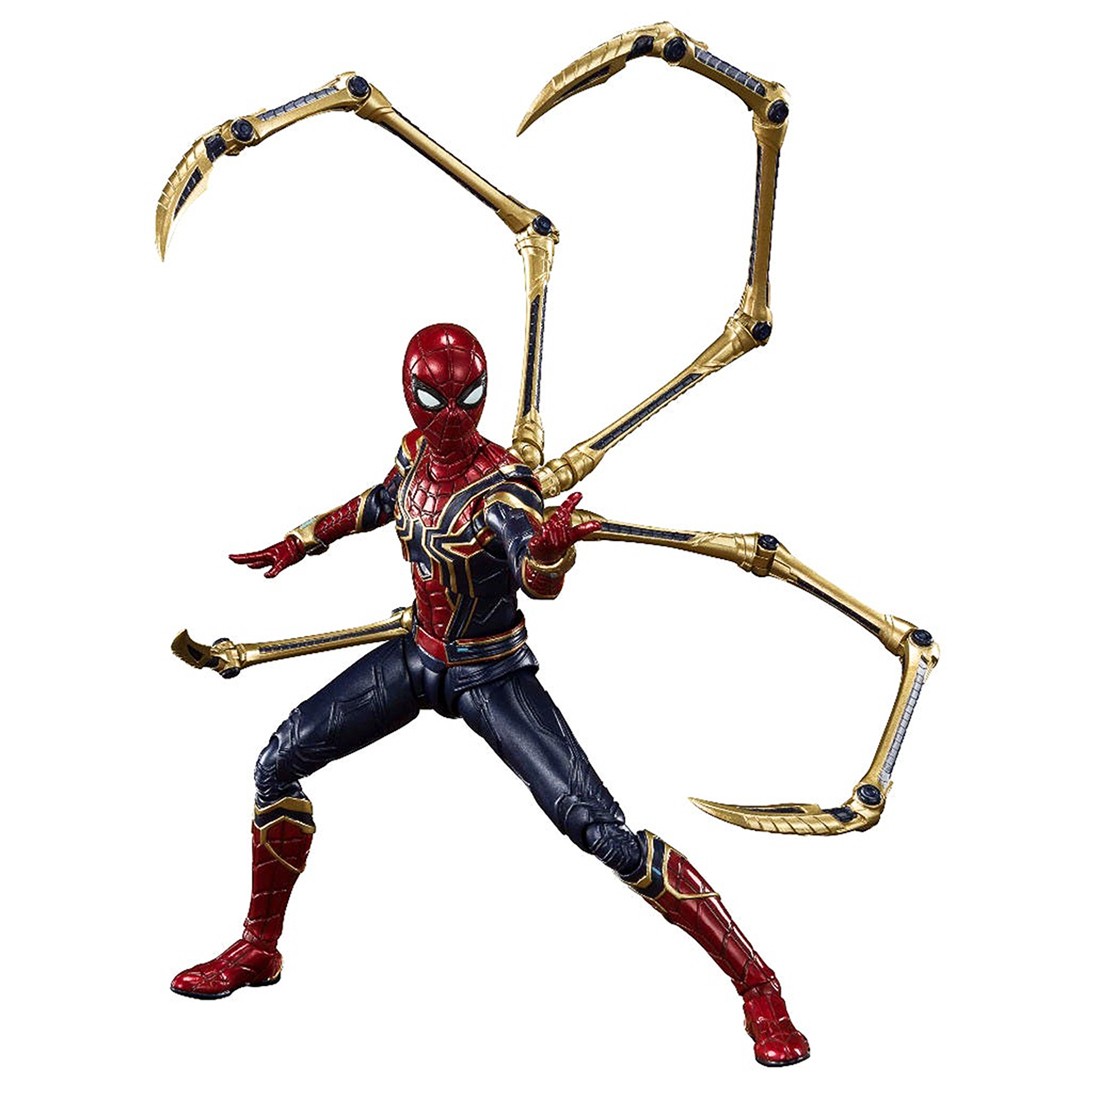 Bandai S.H.Figuarts Avengers Endgame Iron Spider Final Battle Edition Figure (red)